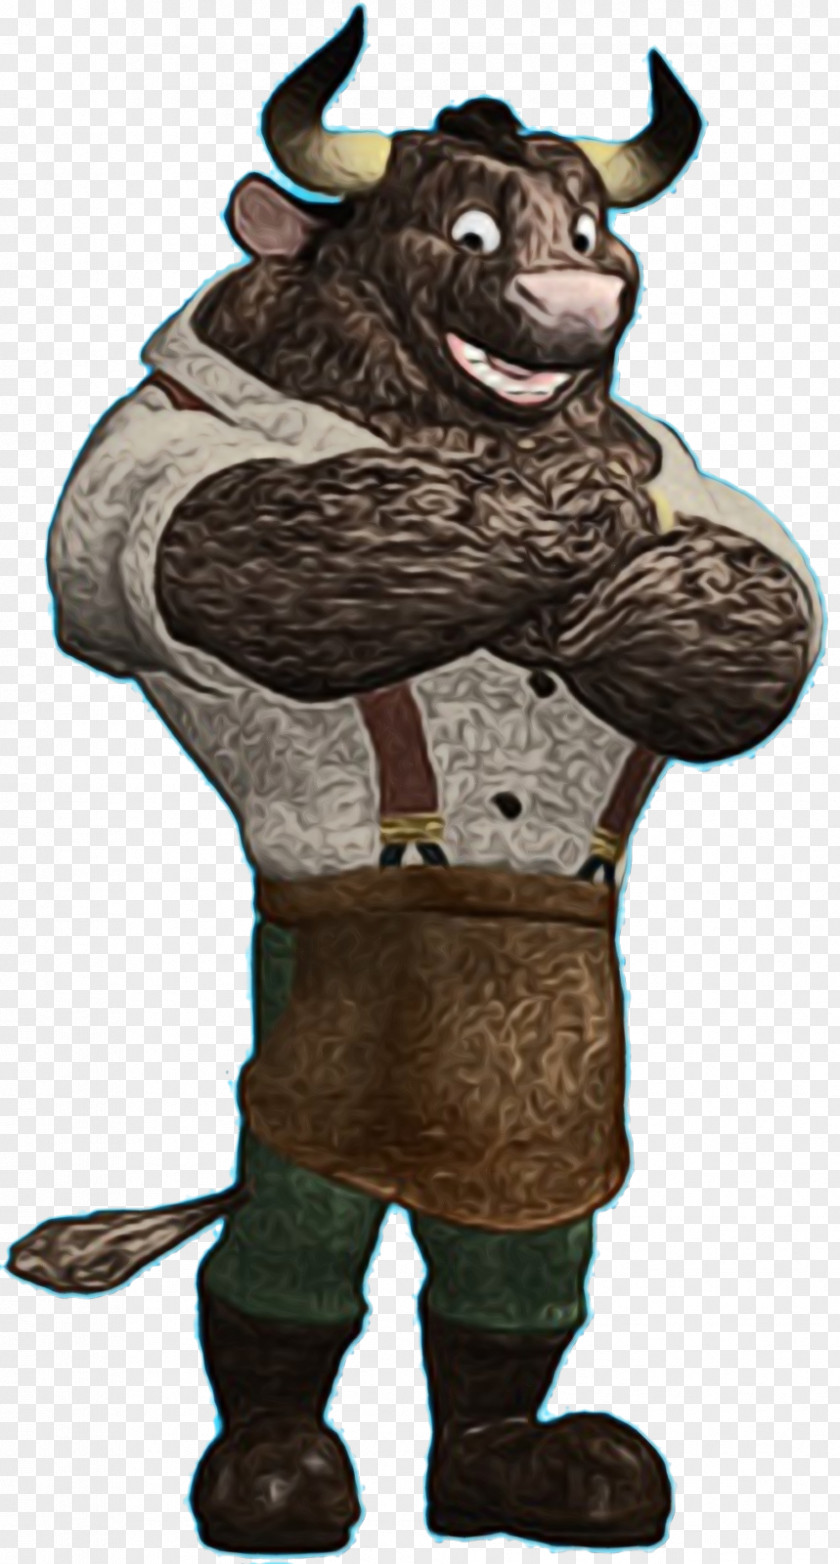 Brown Bear Mascot Cartoon PNG